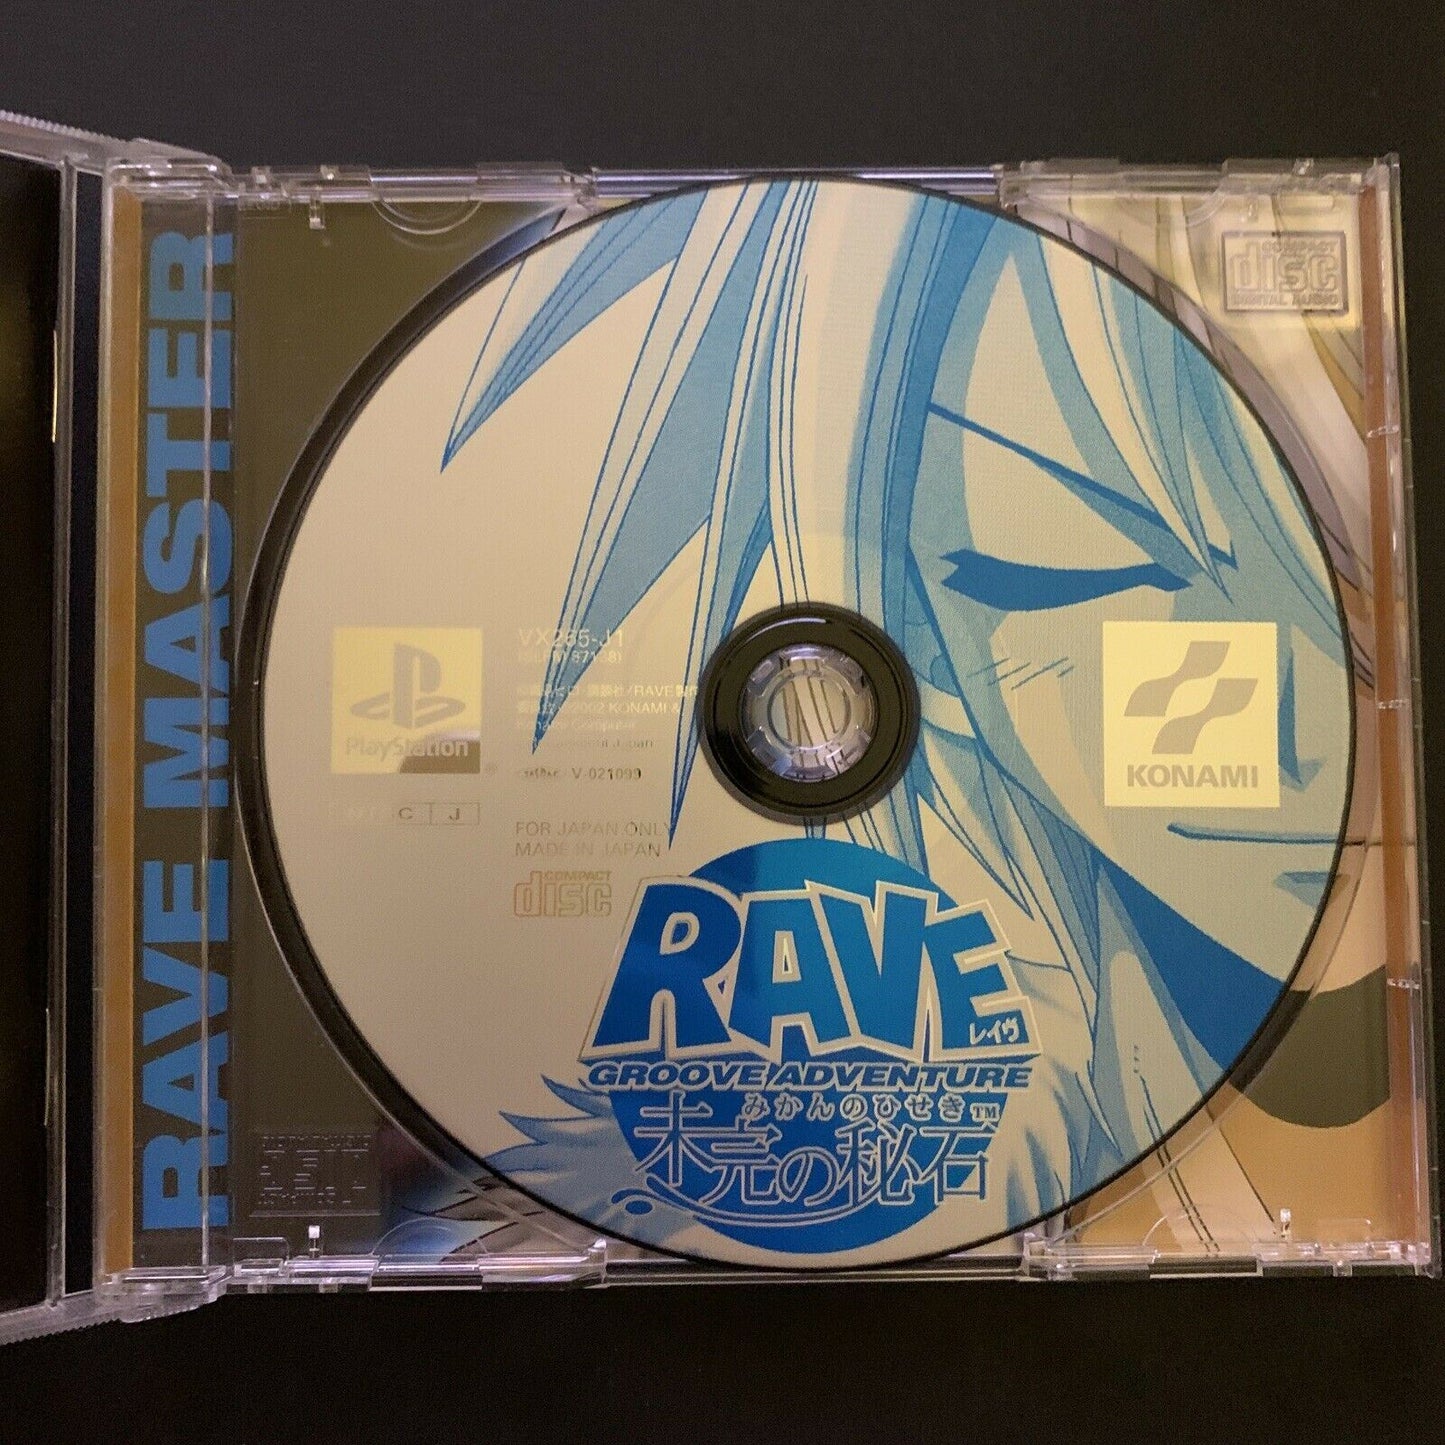 Groove Adventure Rave - PlayStation PS1 NTSC-J Japan Konami Game 2002